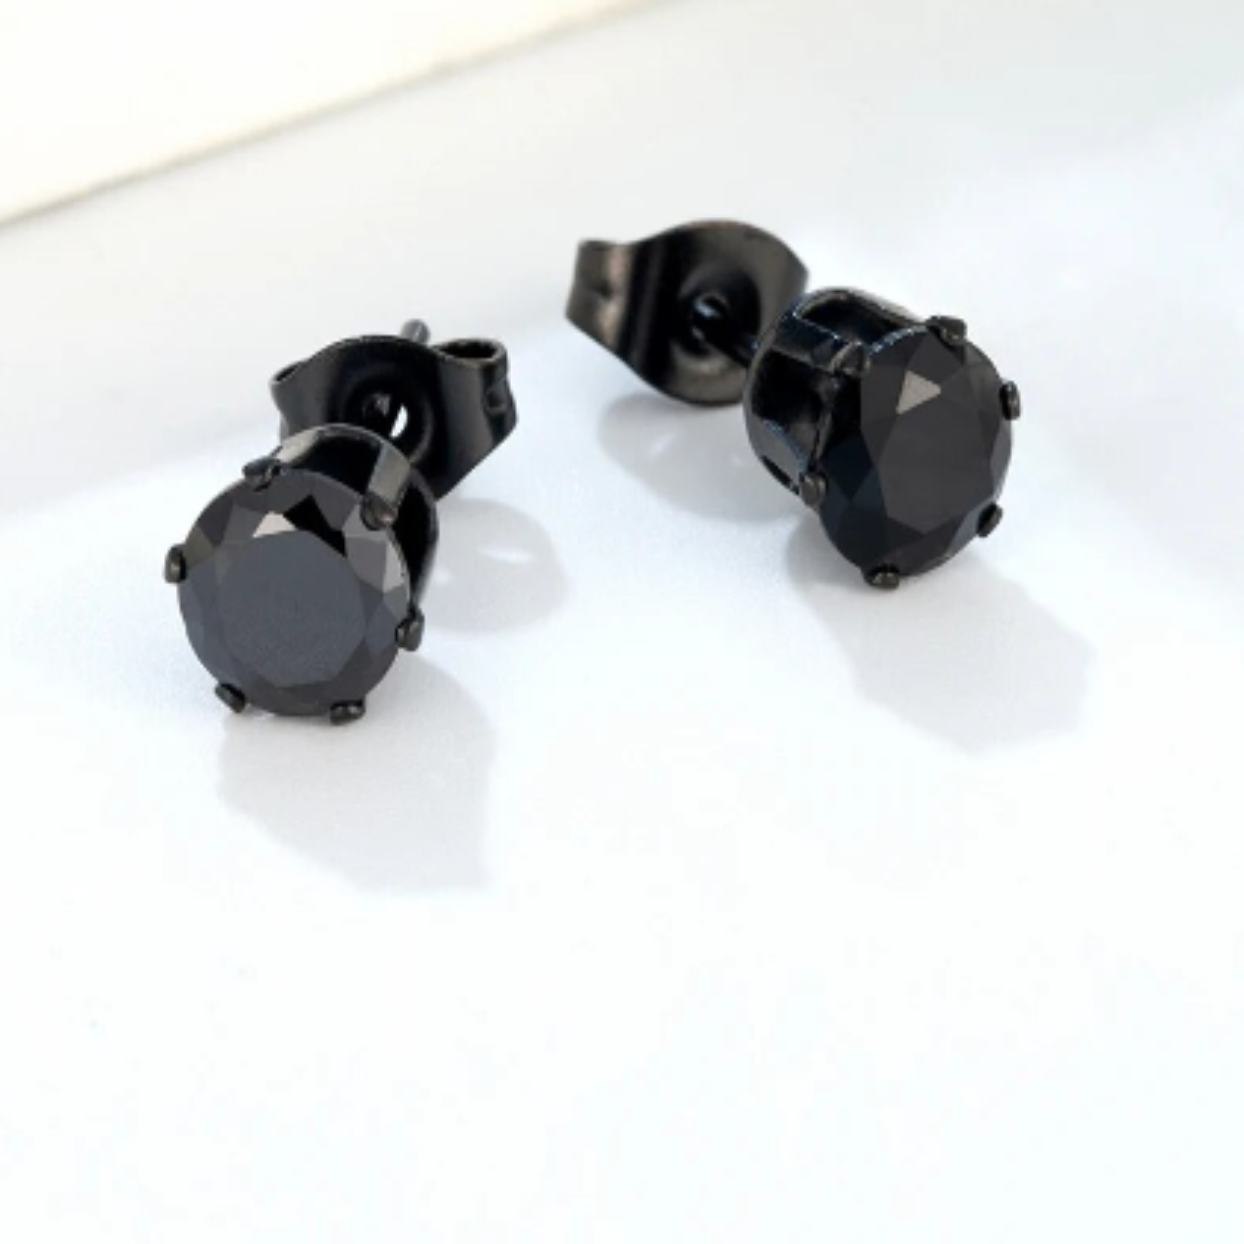 BLACK CZ -  18K GOLD WATERPROOF STUD EARRINGS - Premium earrings from www.beachboho.com.au - Just $35! Shop now at www.beachboho.com.au